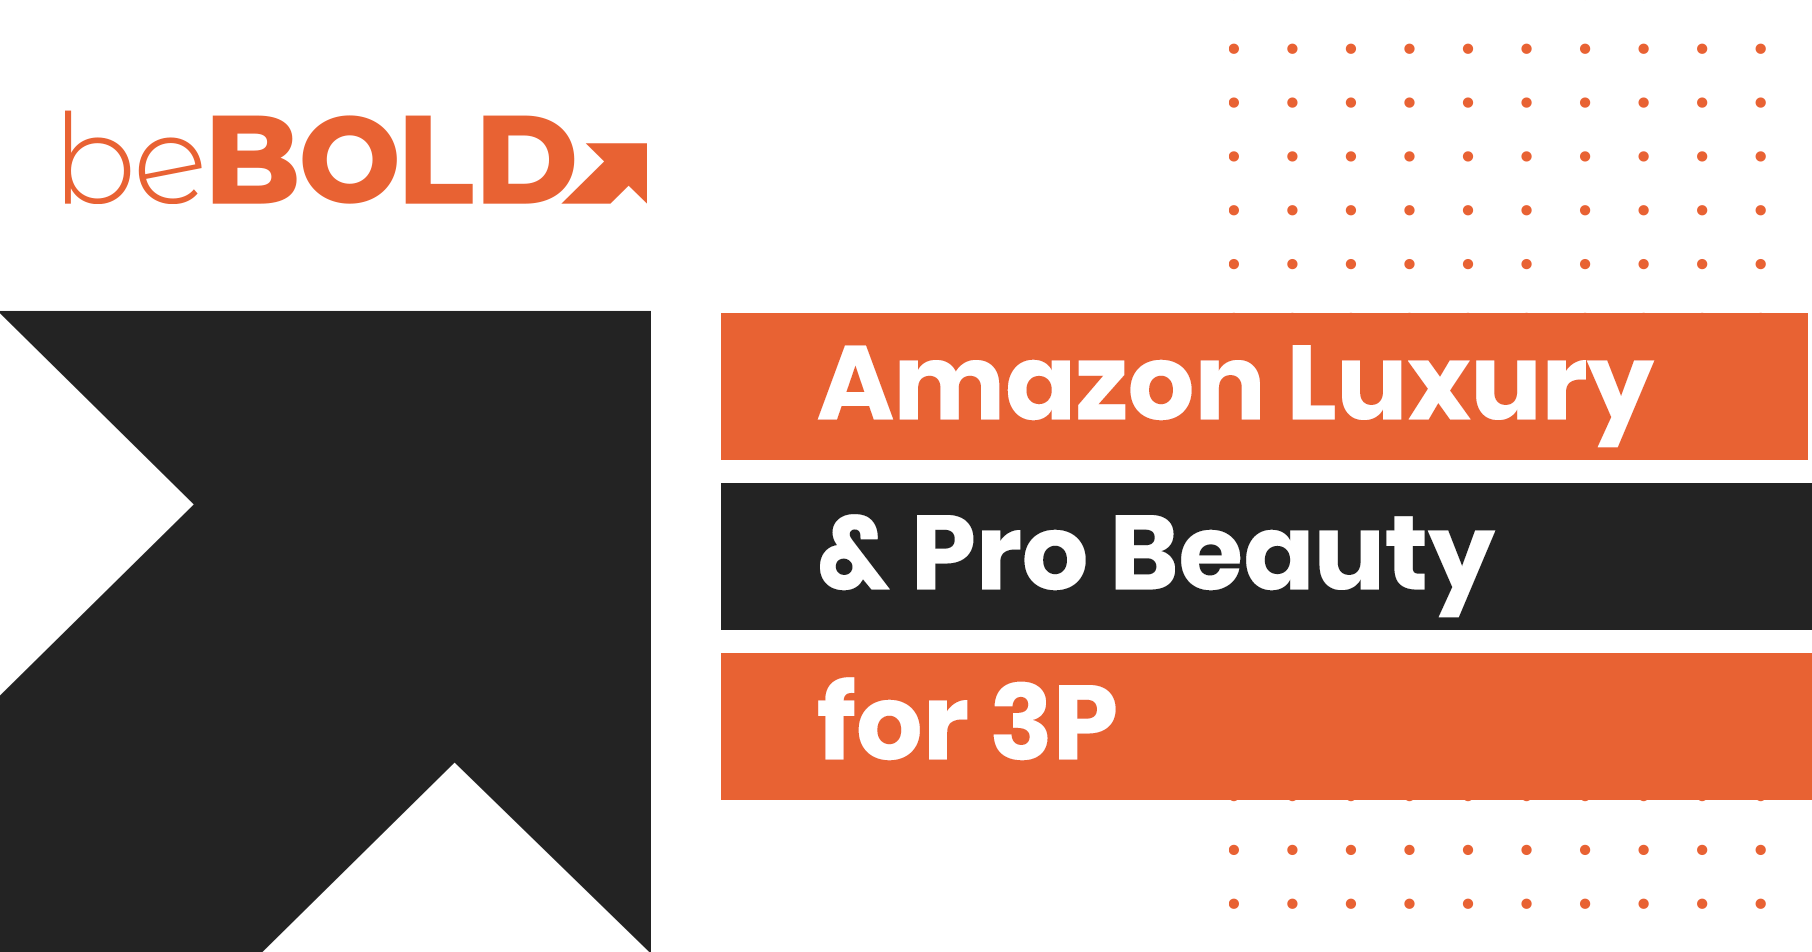 Amazon Premium & Professional Beauty 3P Sellers